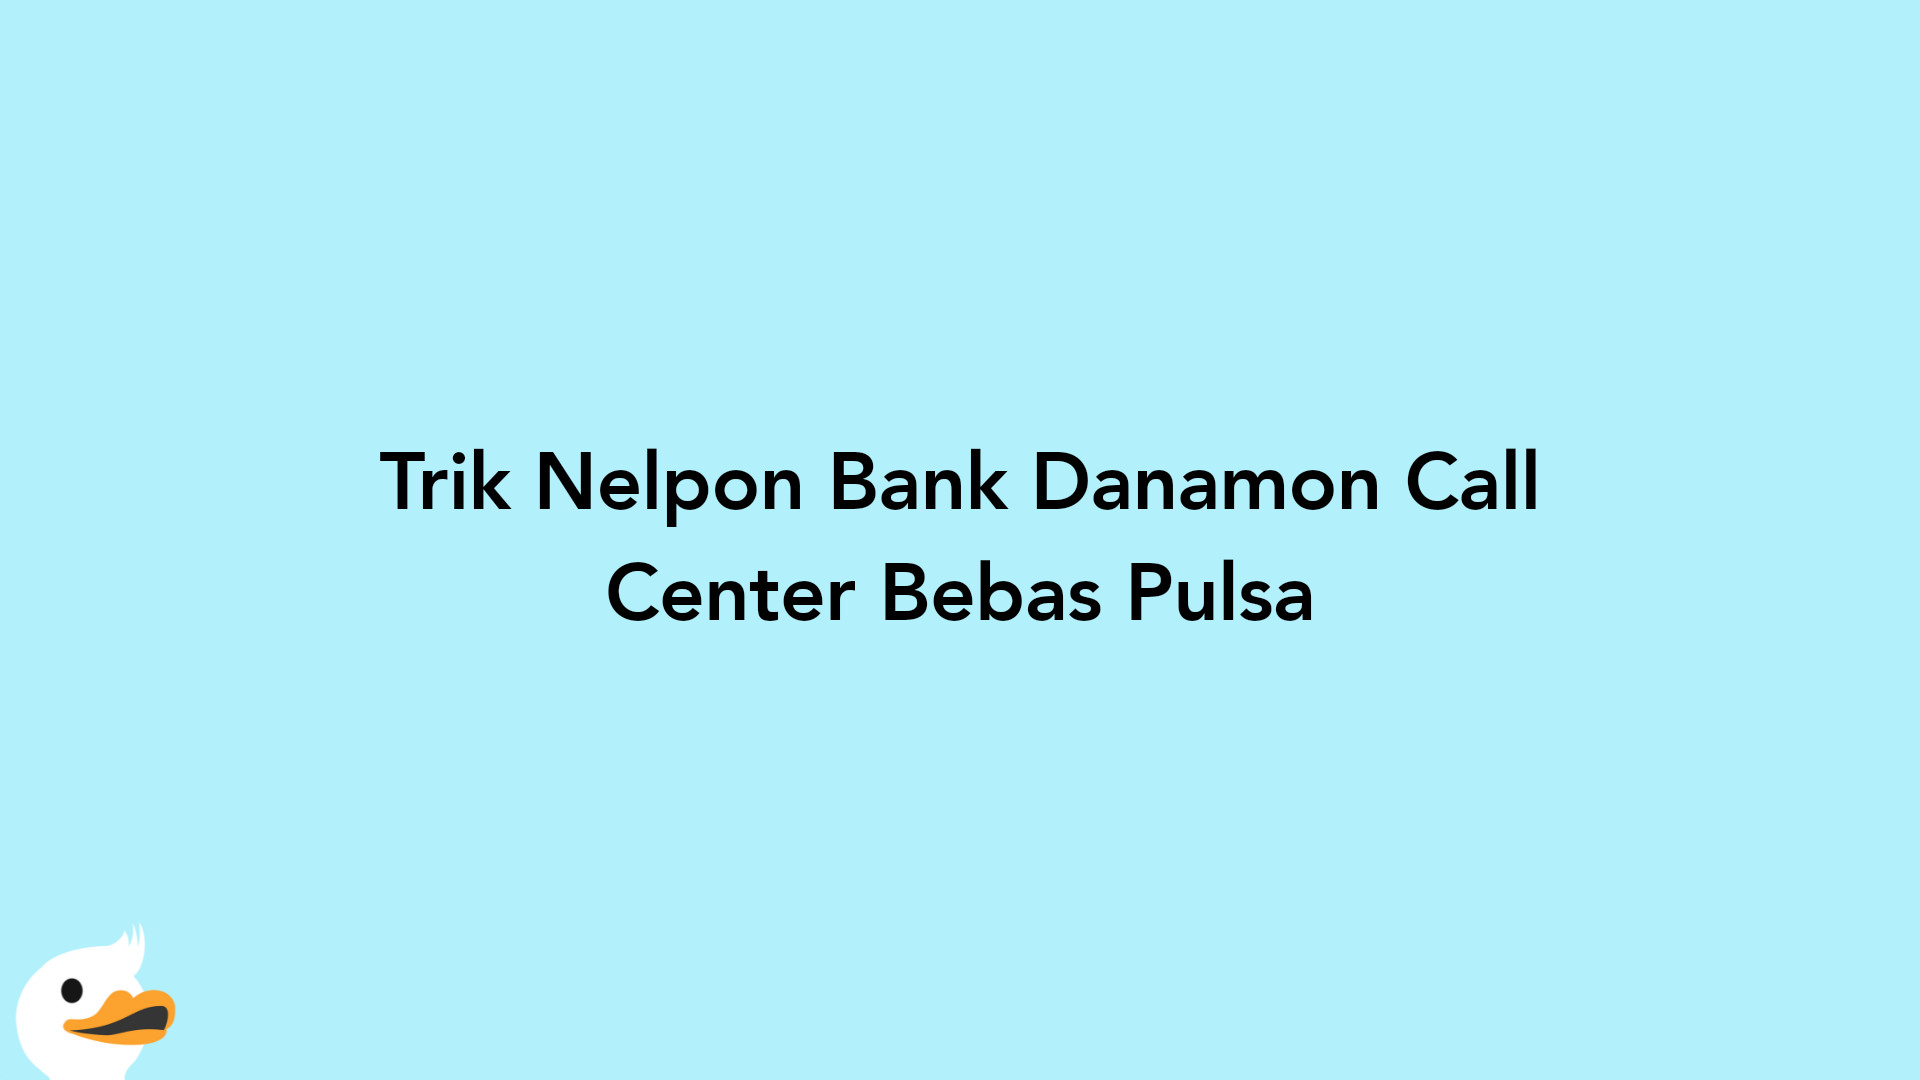 Trik Nelpon Bank Danamon Call Center Bebas Pulsa